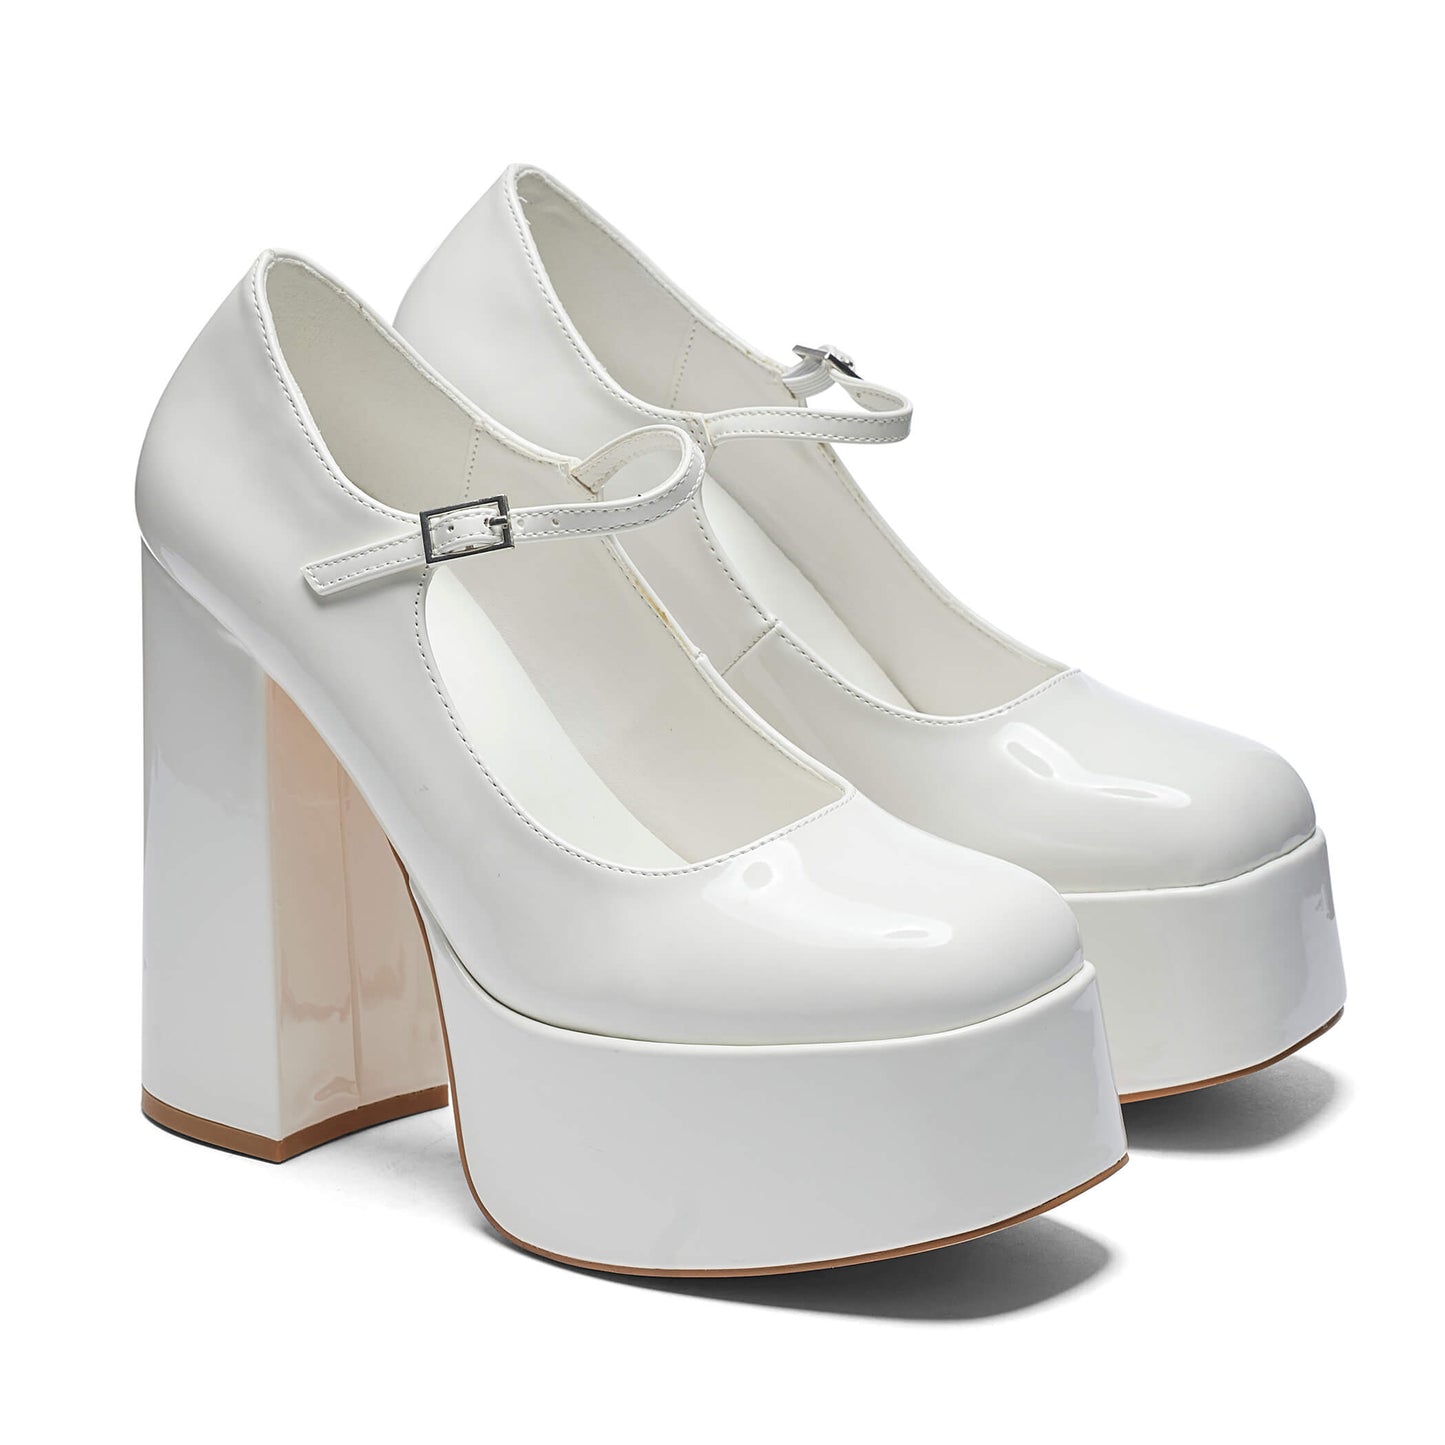 Darkbloom White Patent Platform Heels - Shoes - KOI Footwear - White - Three-Quarter View